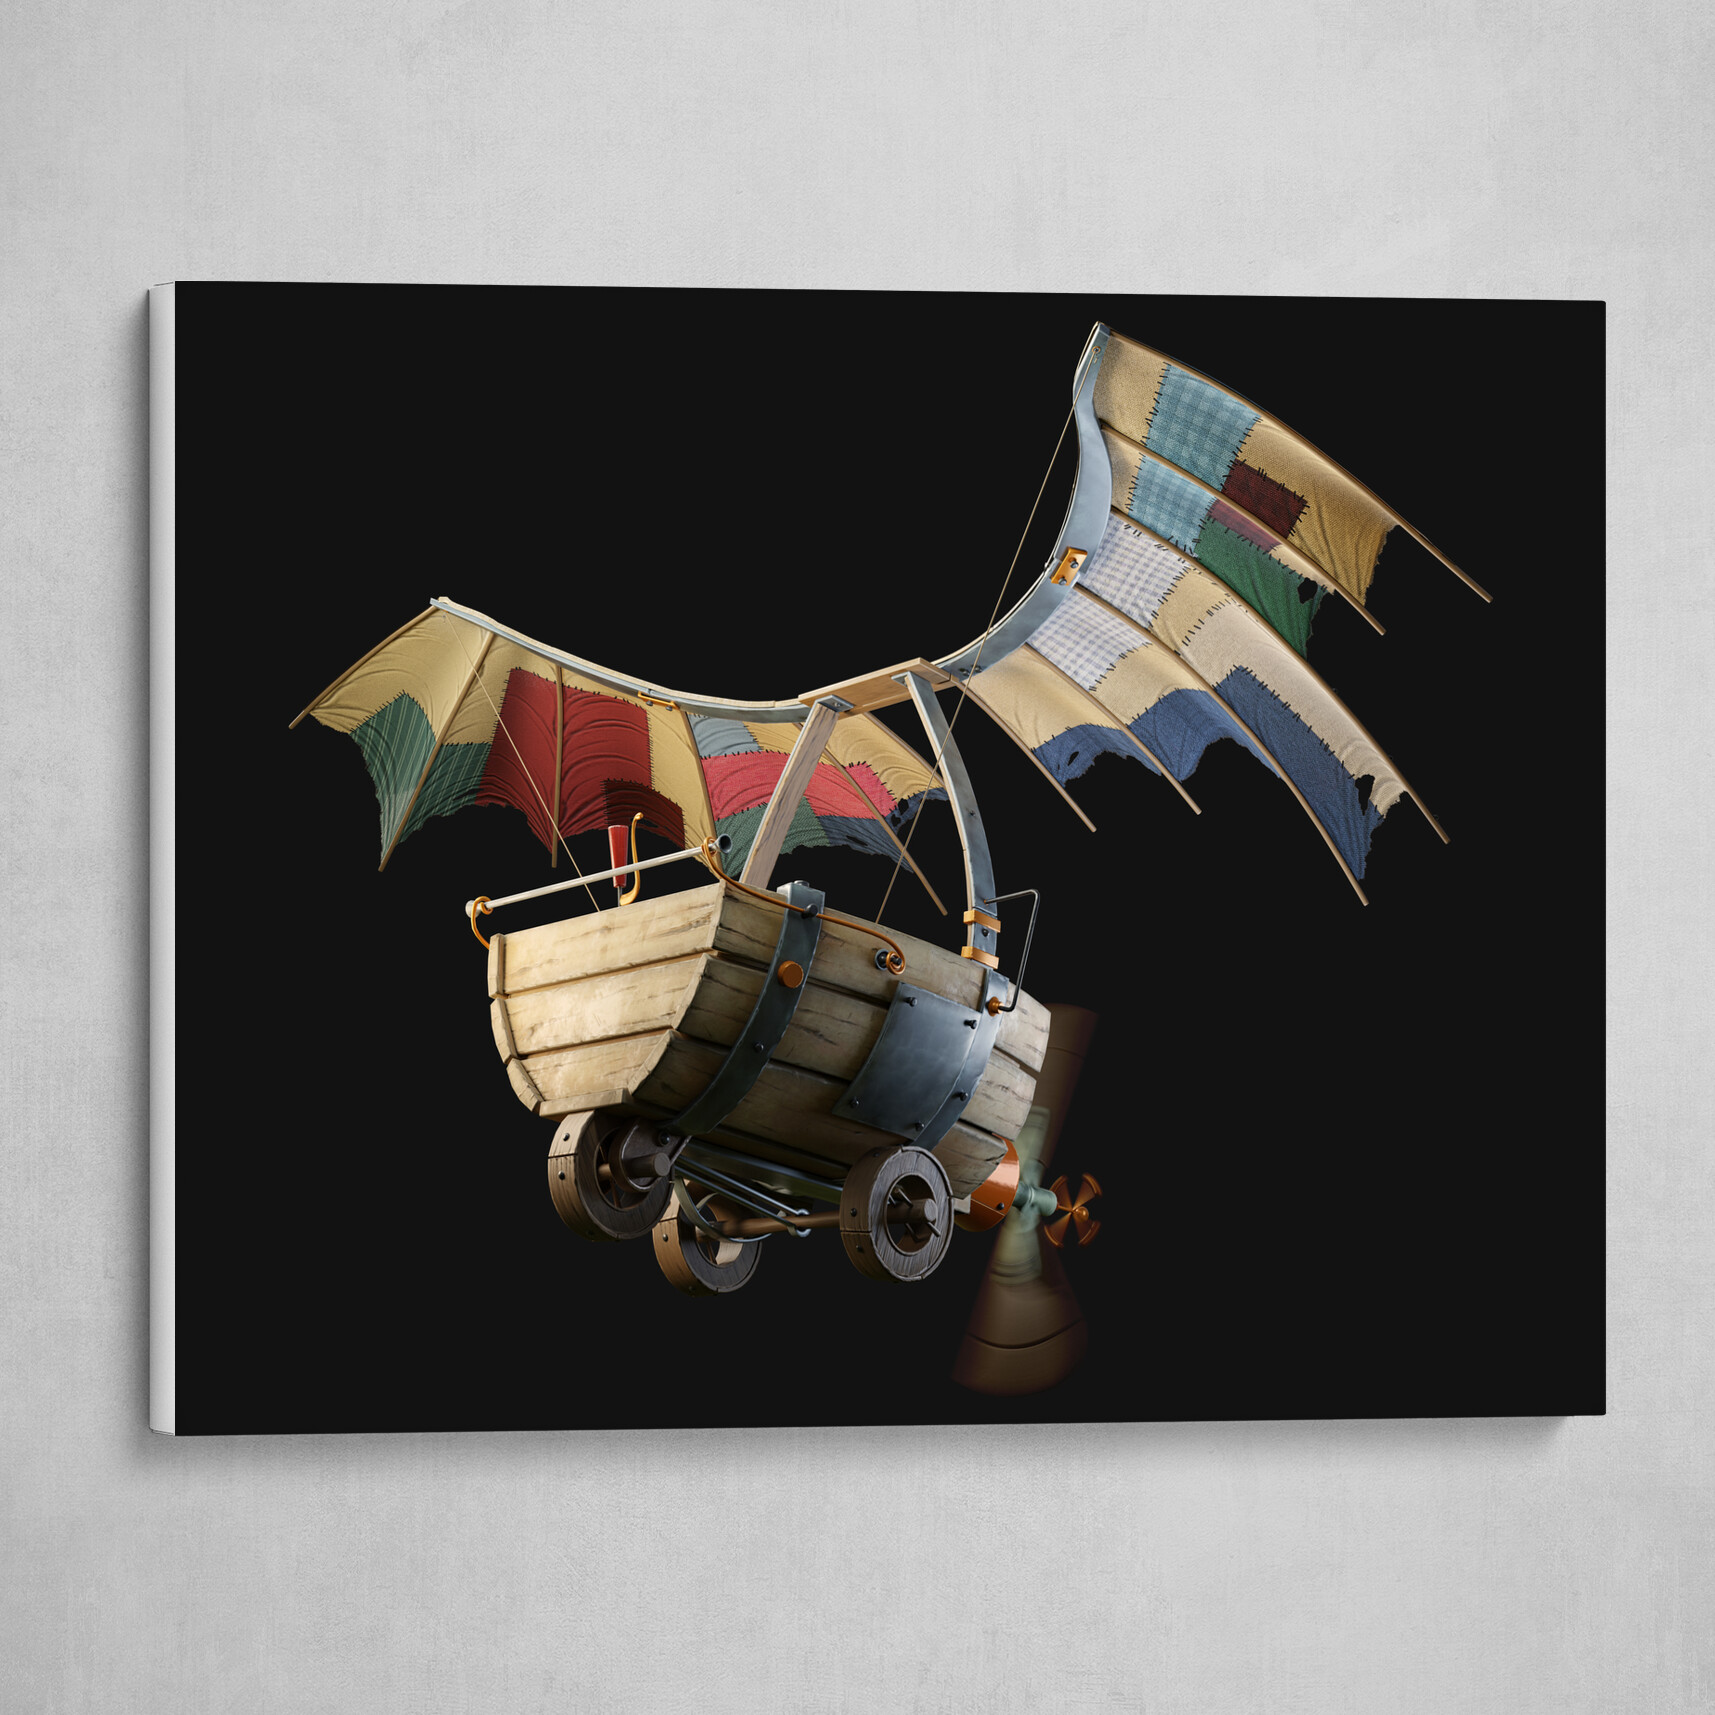 Little Flying Boat2